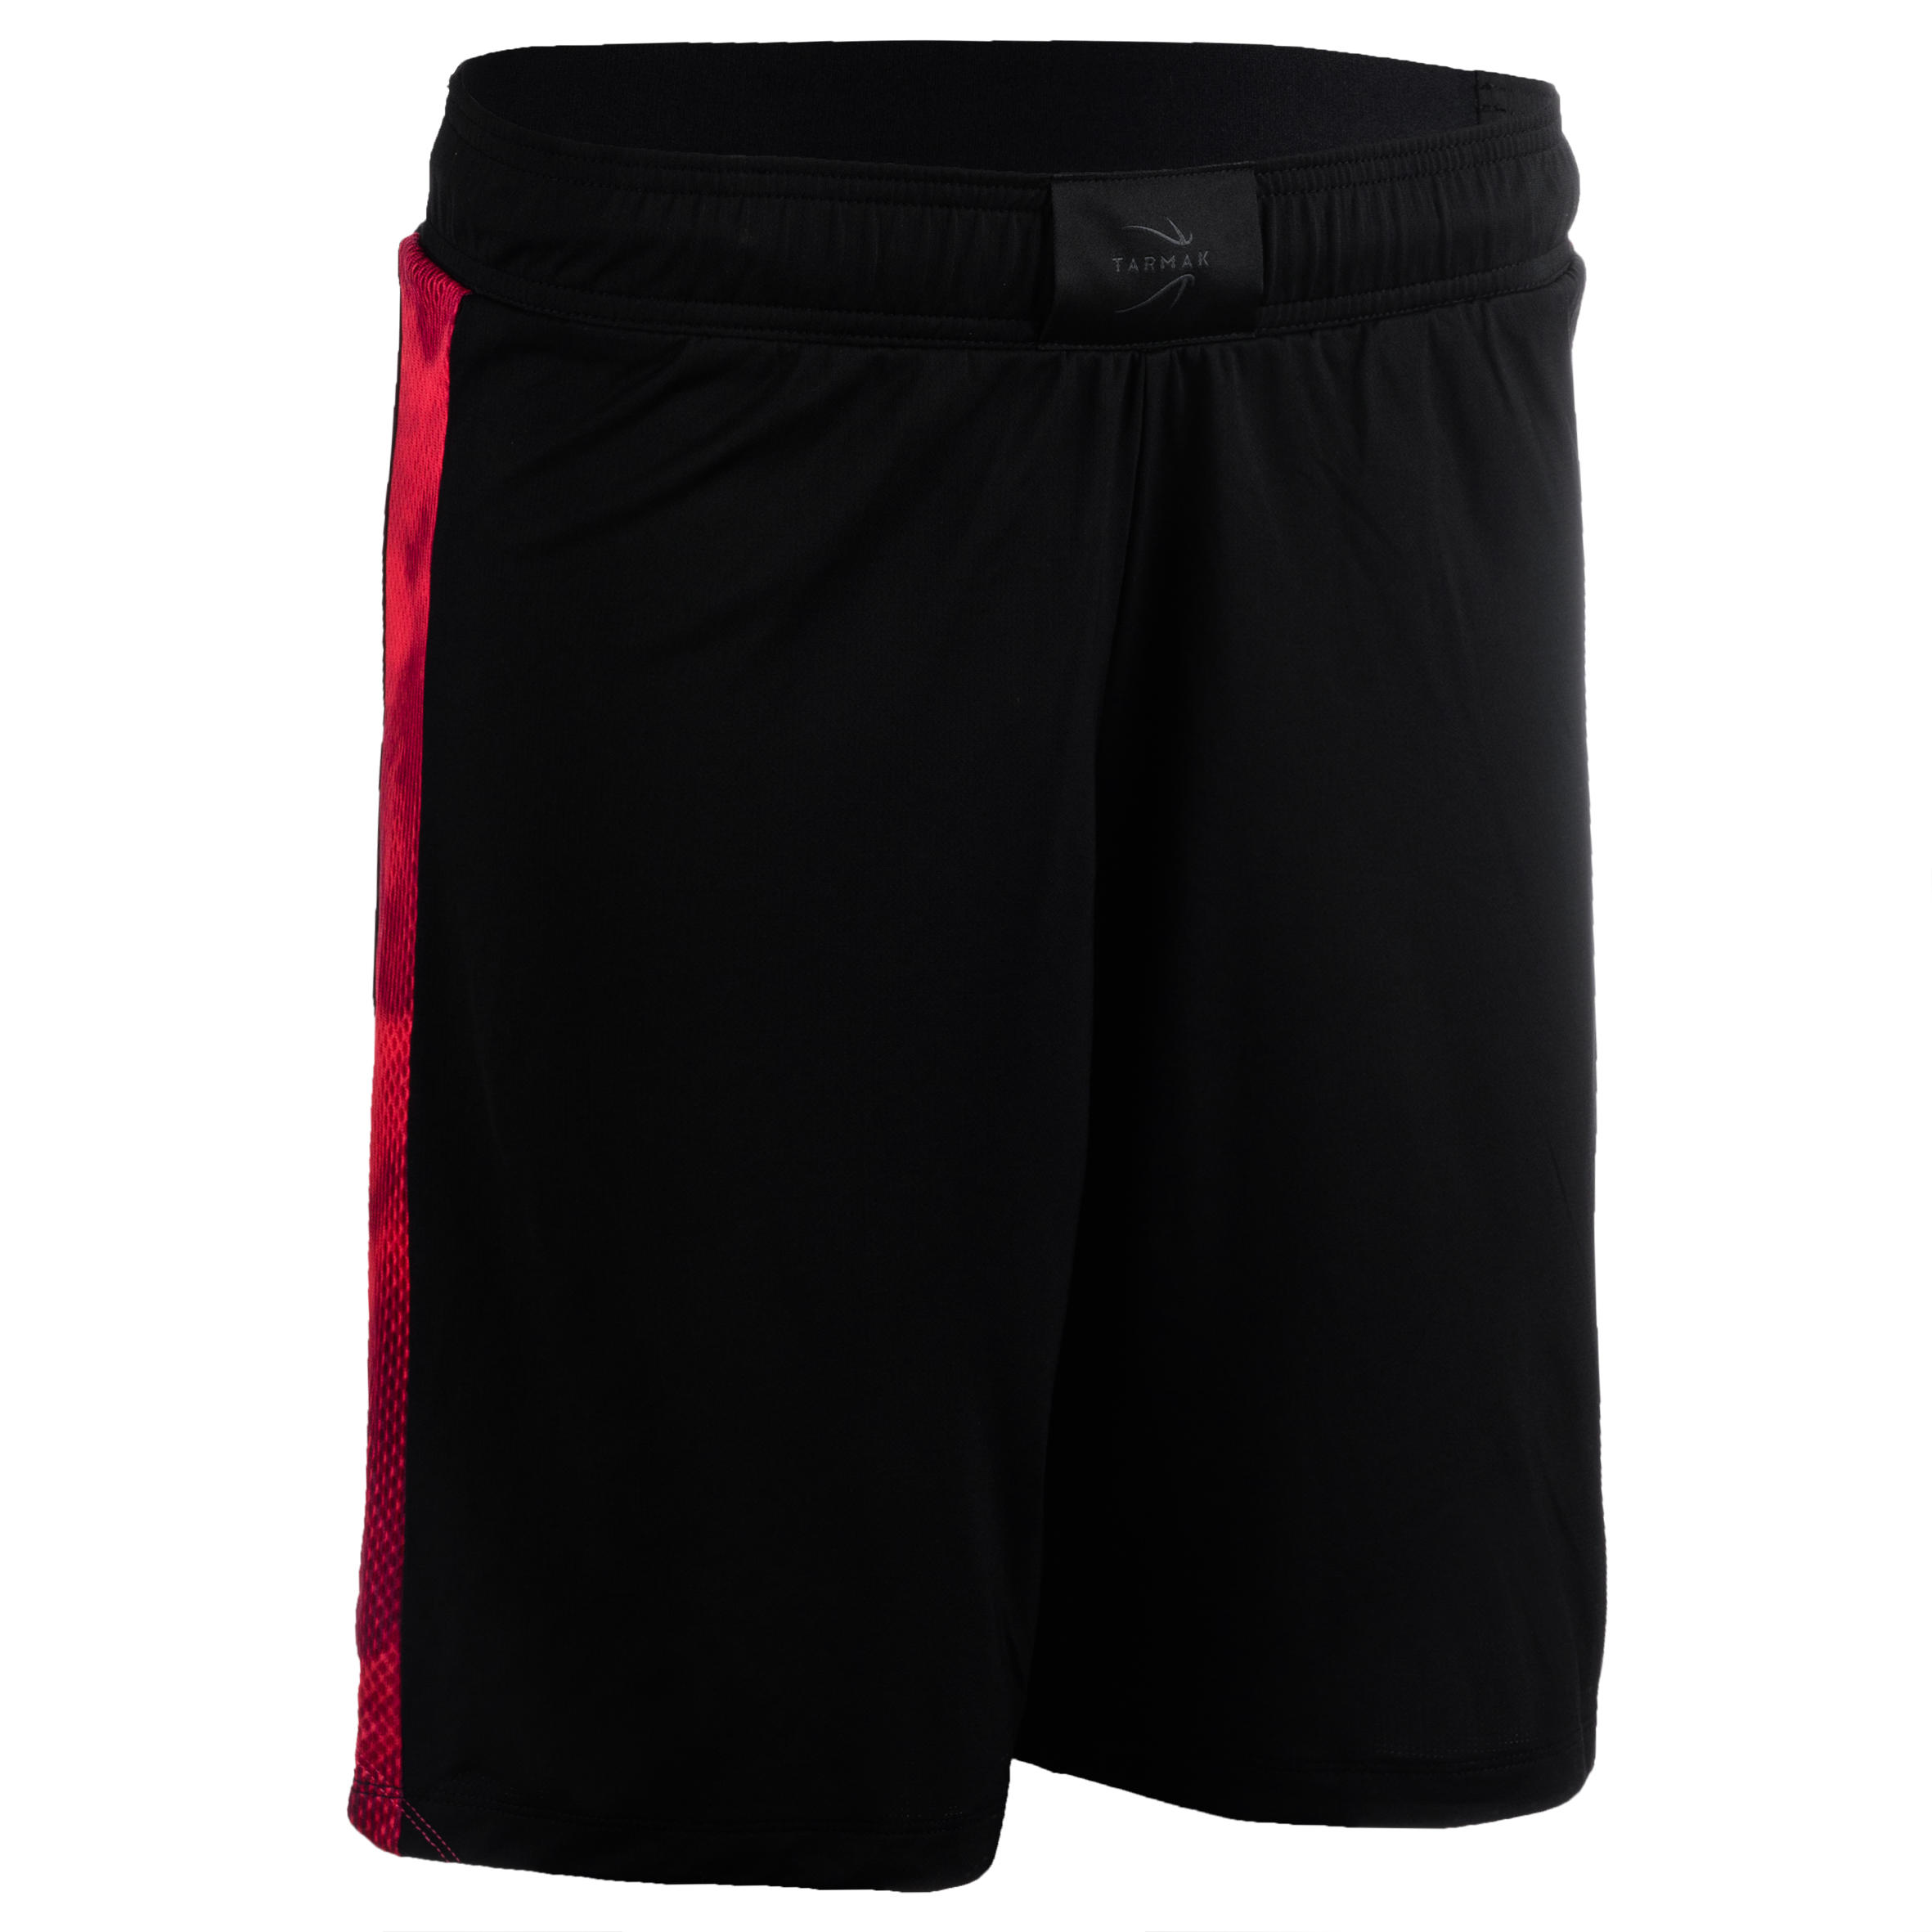 SH500 Women's Basketball Shorts - Black/Pink 1/7